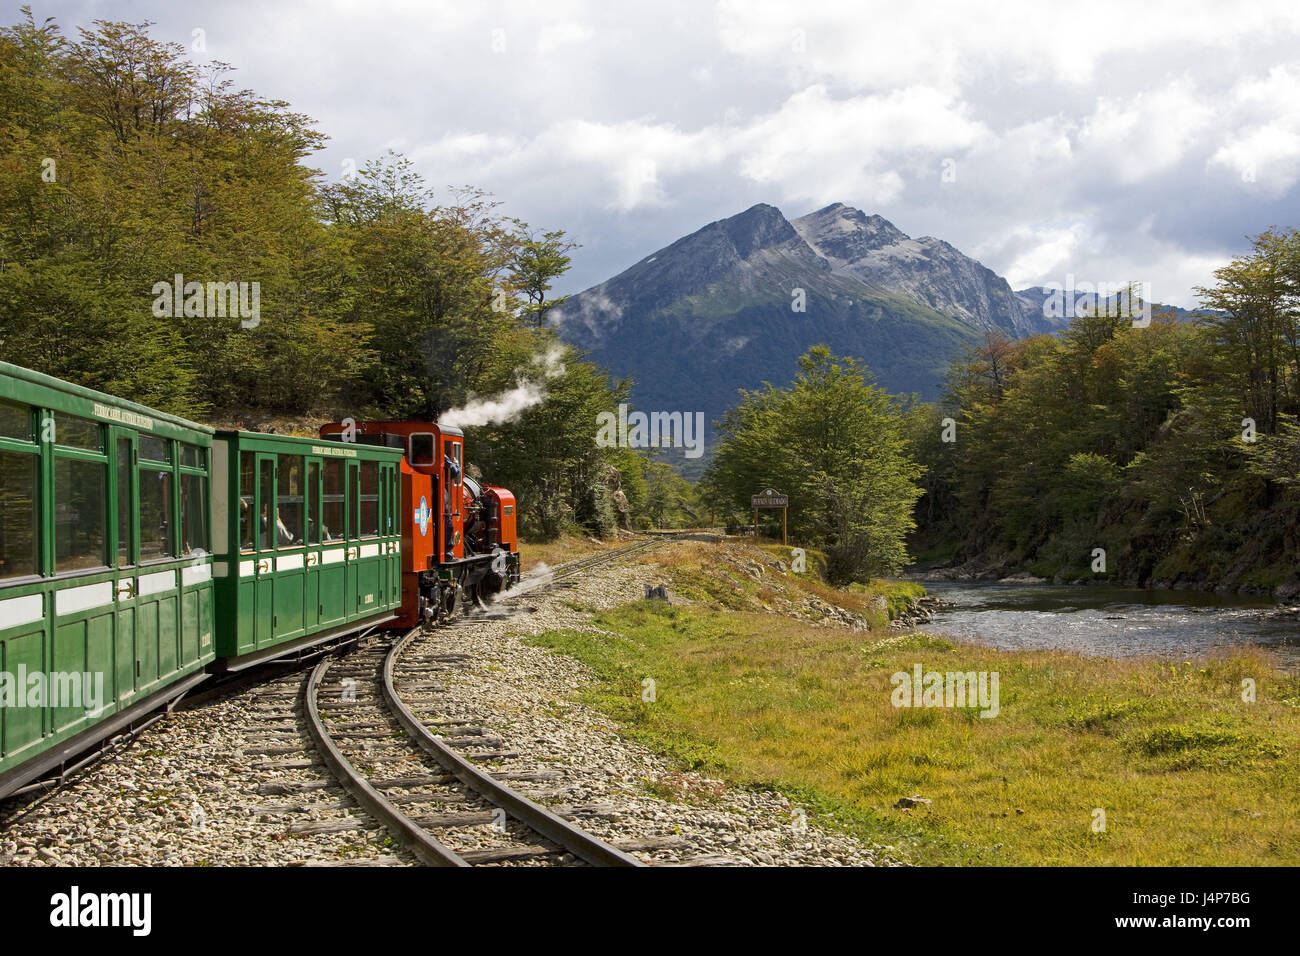 Argentina, Tierra del Fuego, Tren del Fin del Mundo, train, locomotive, carriages, Stock Photo